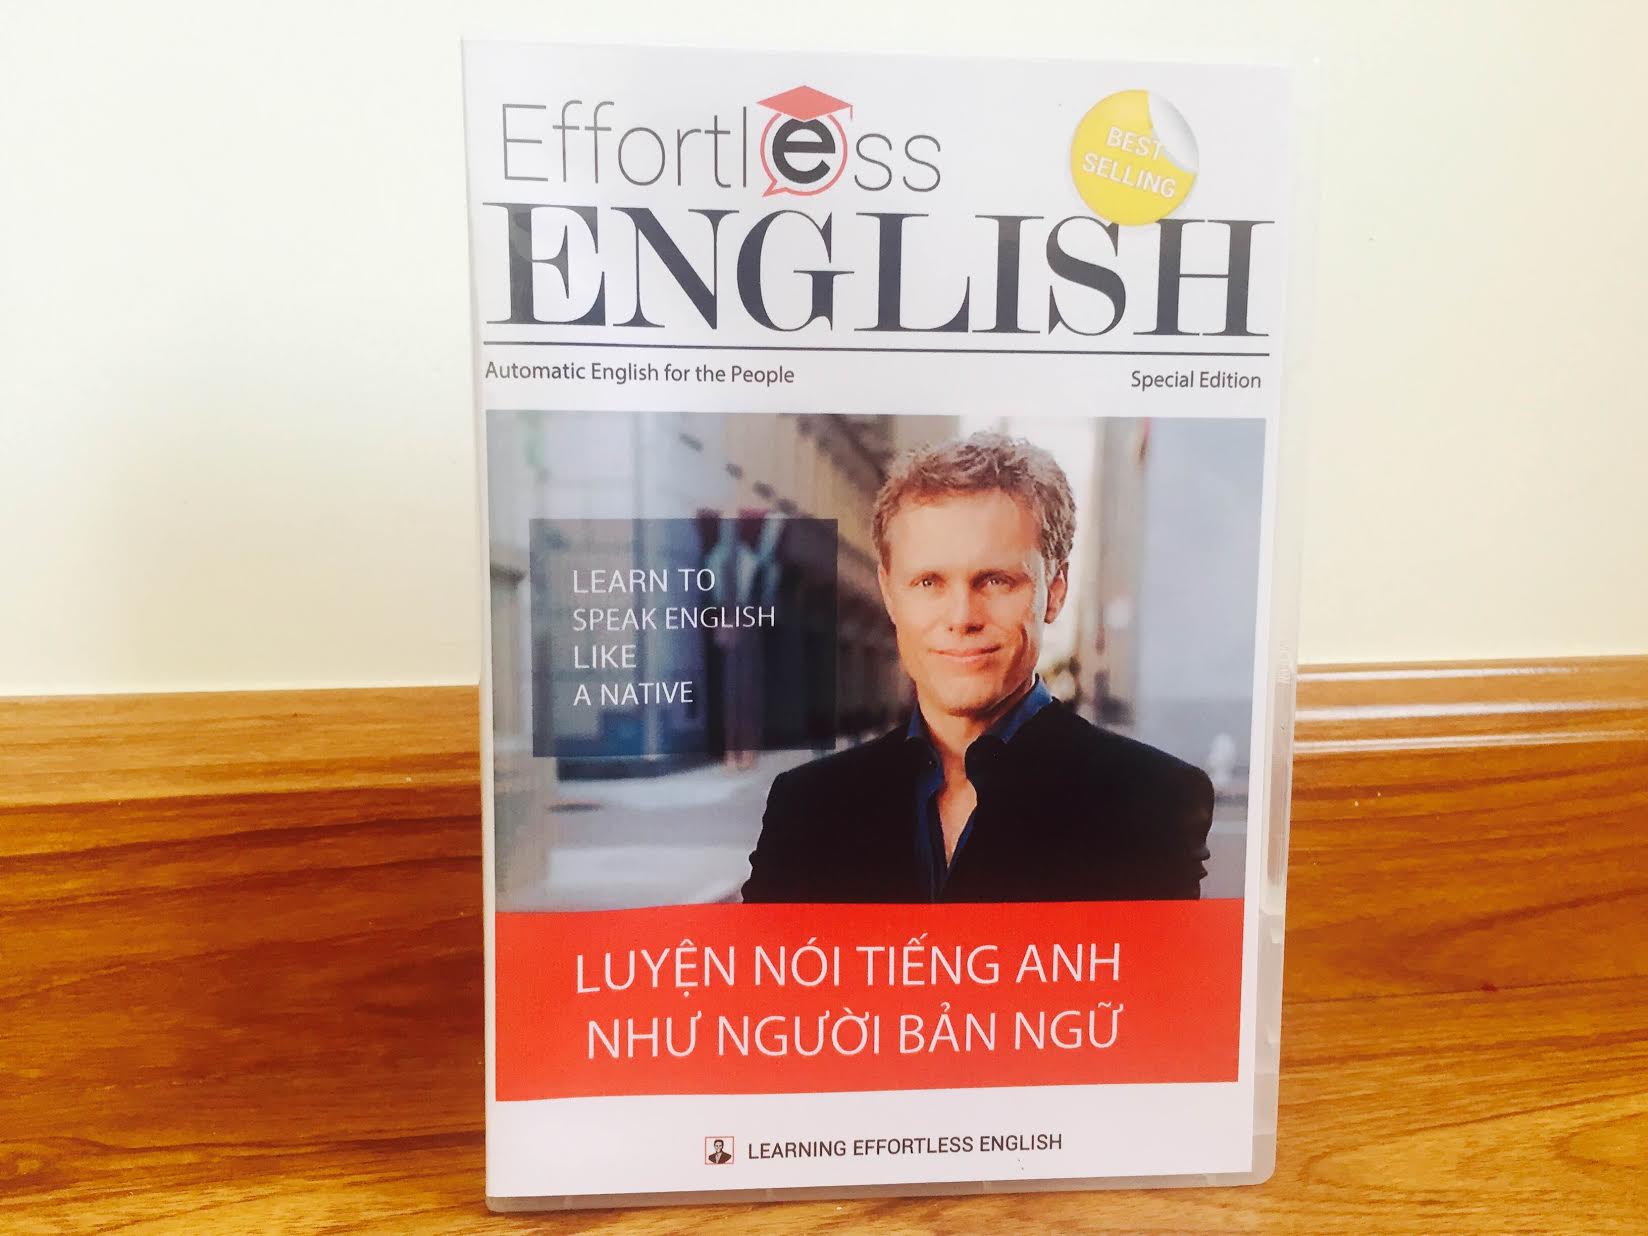 effortless english